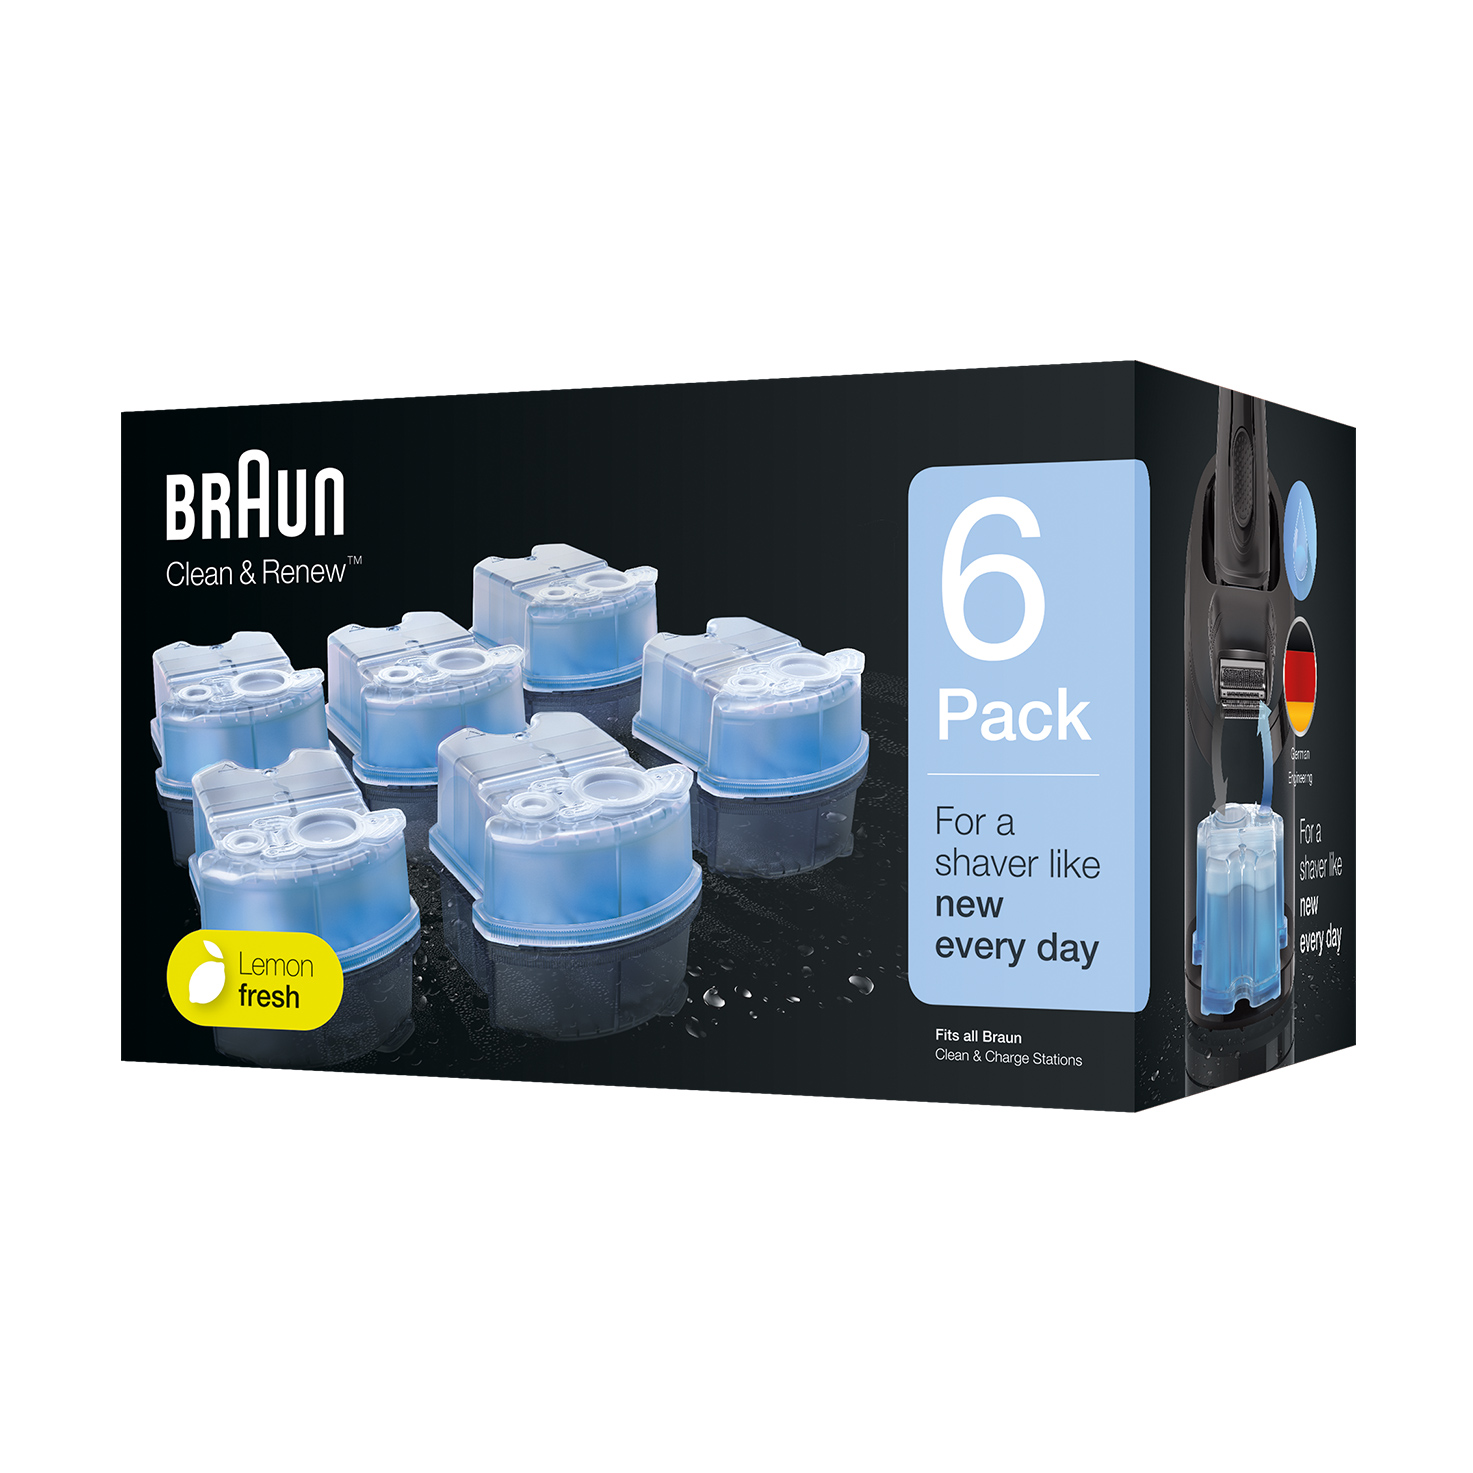 Braun Clean & Renew cartridge 6 pack